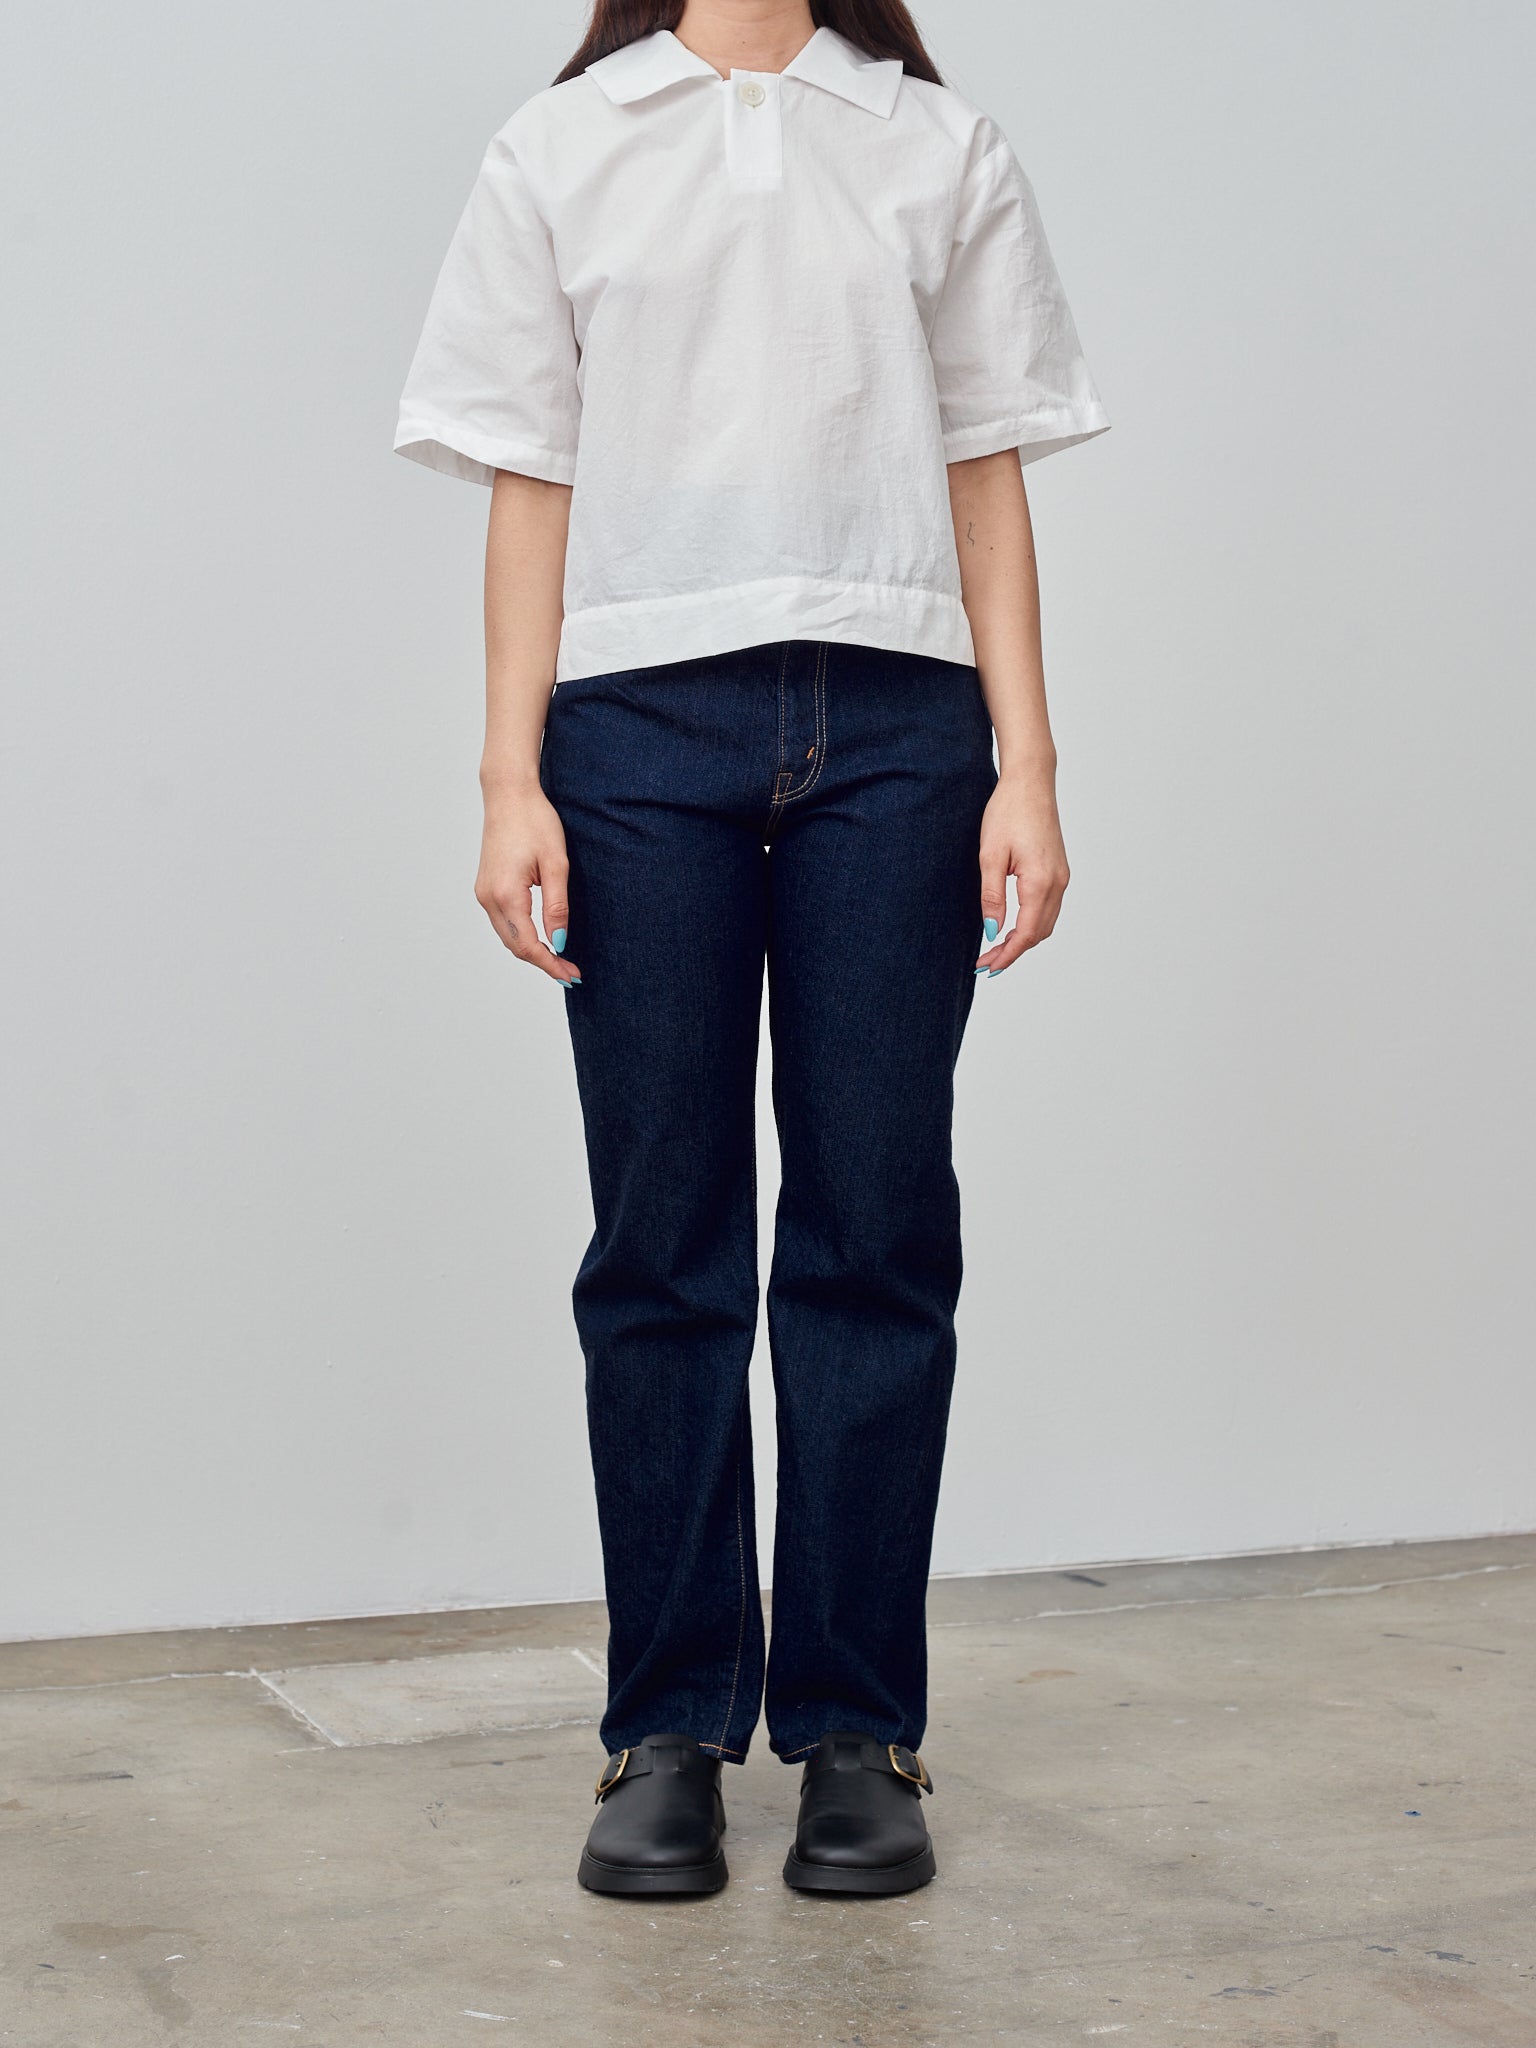 Namu Shop - Nicholson & Nicholson Twin Shirt - White